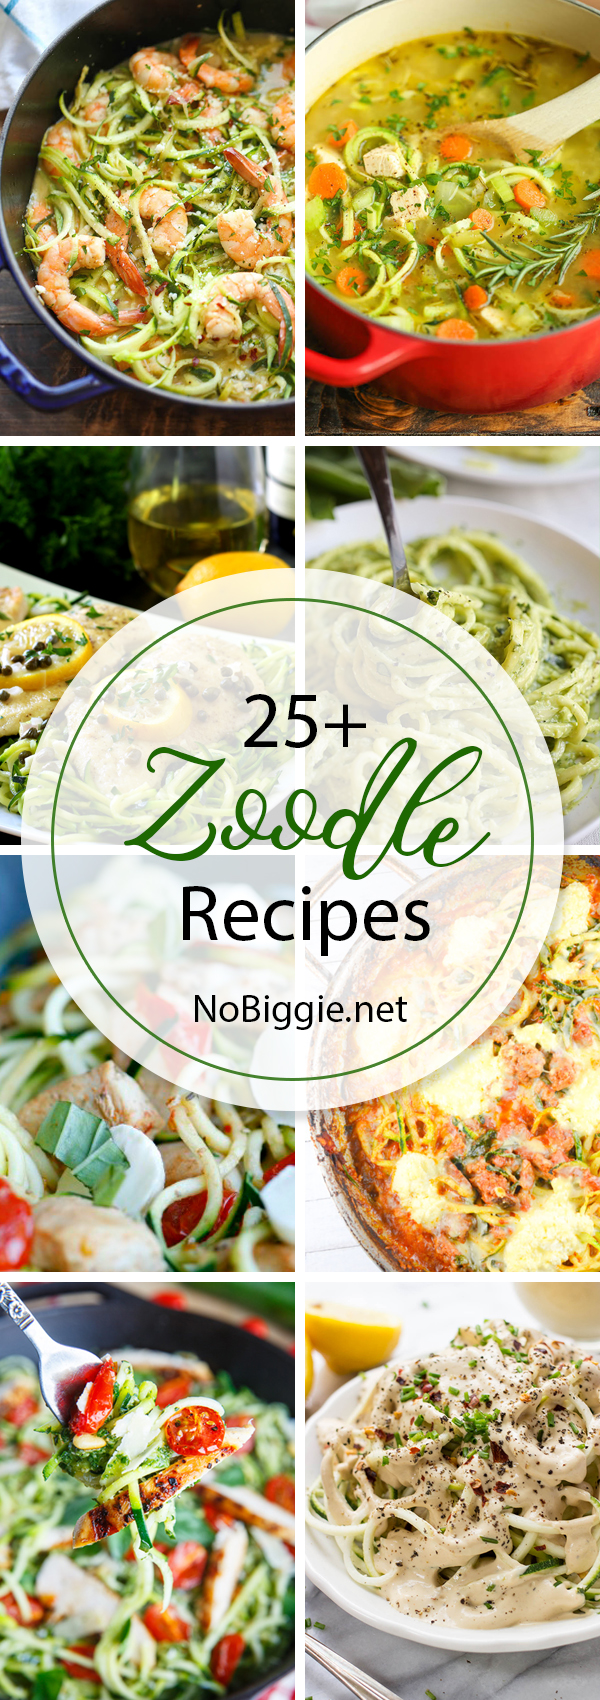 25+ Zoodle Recipes (Zucchini Noodles) | NoBiggie